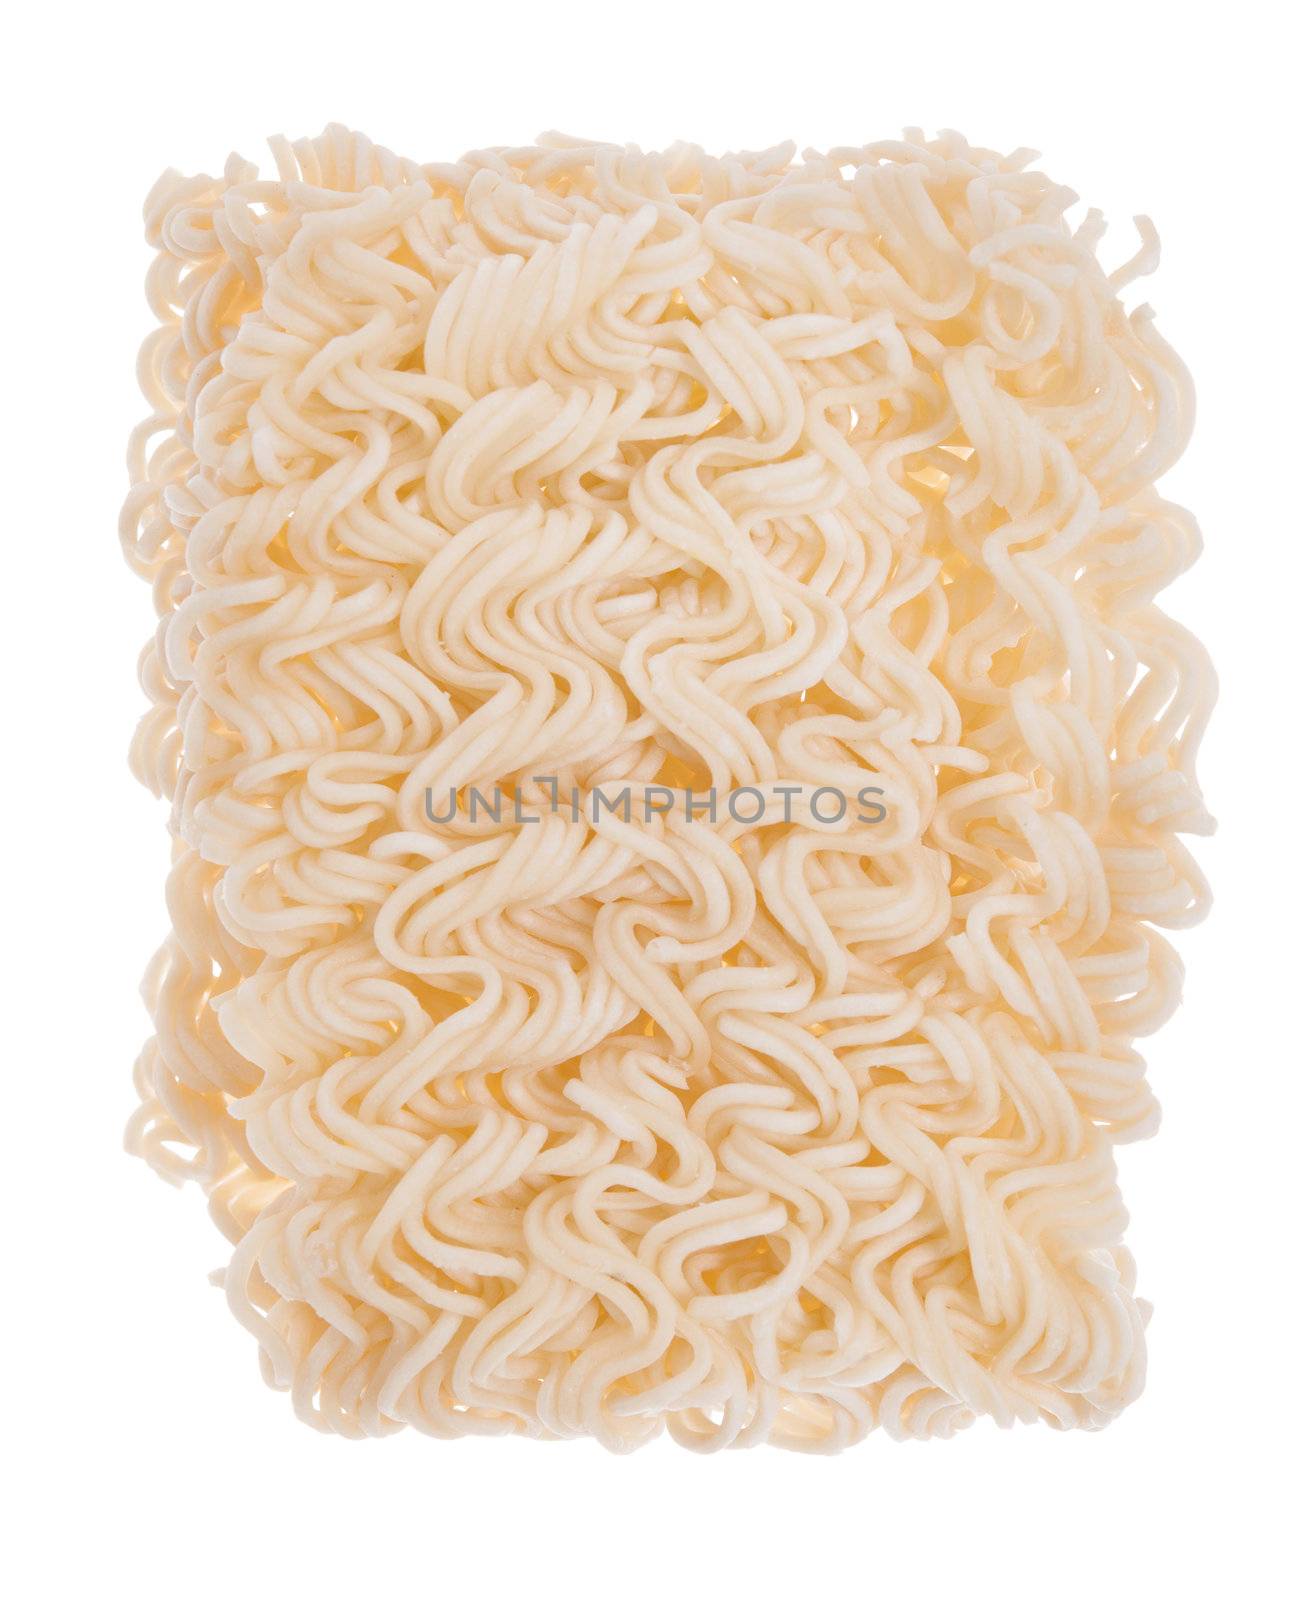 Asian ramen instant noodles  by szefei